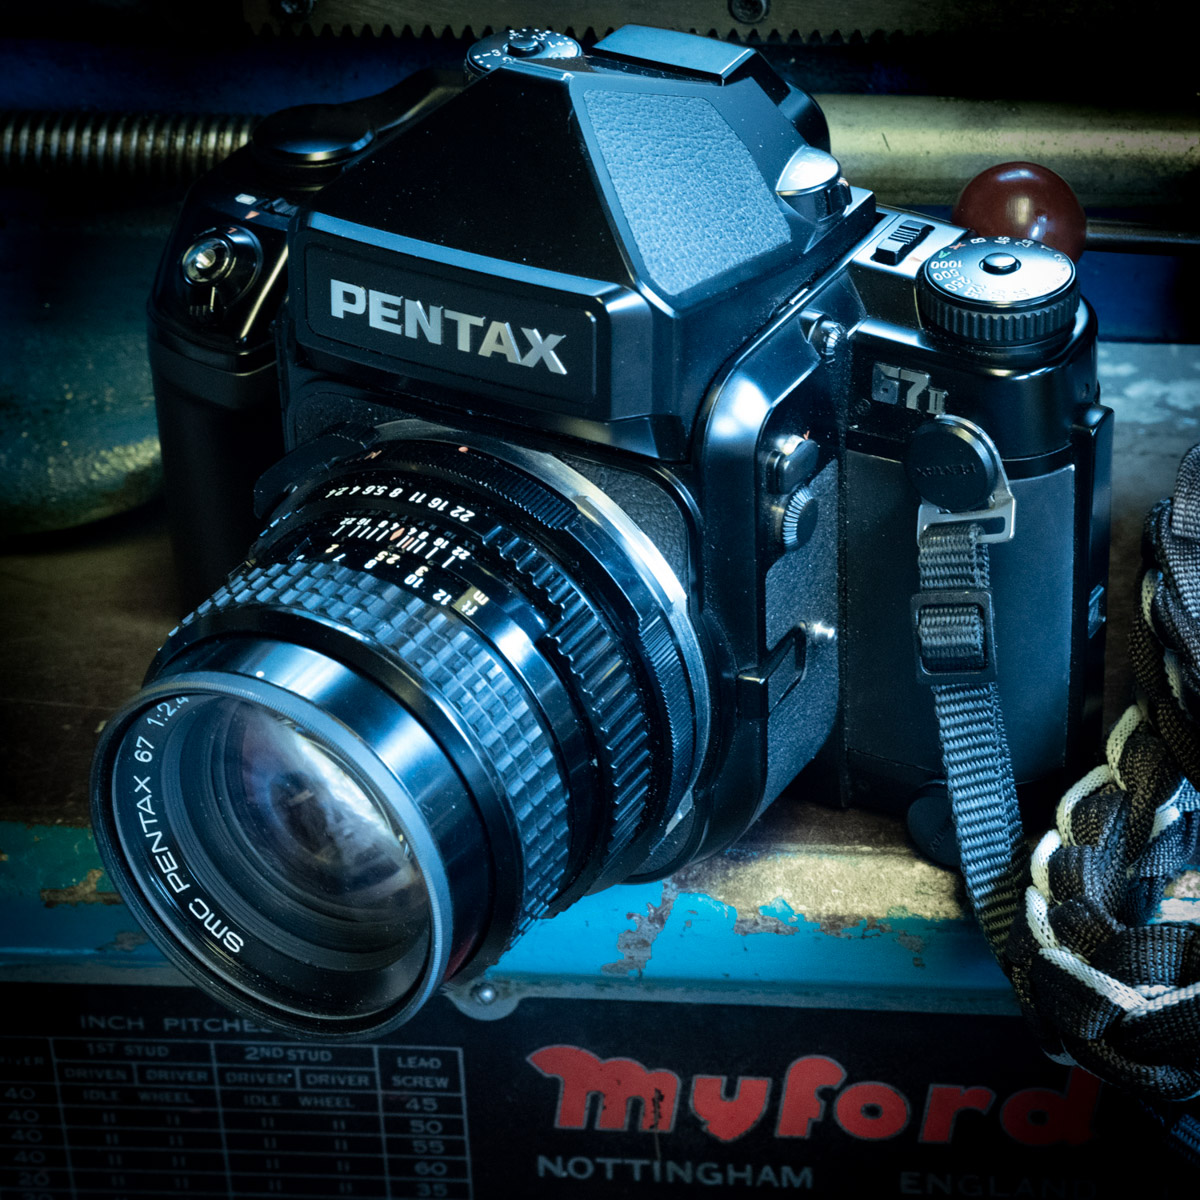 My Pentax 67II and SMC-Pentax 105mm f/2.4